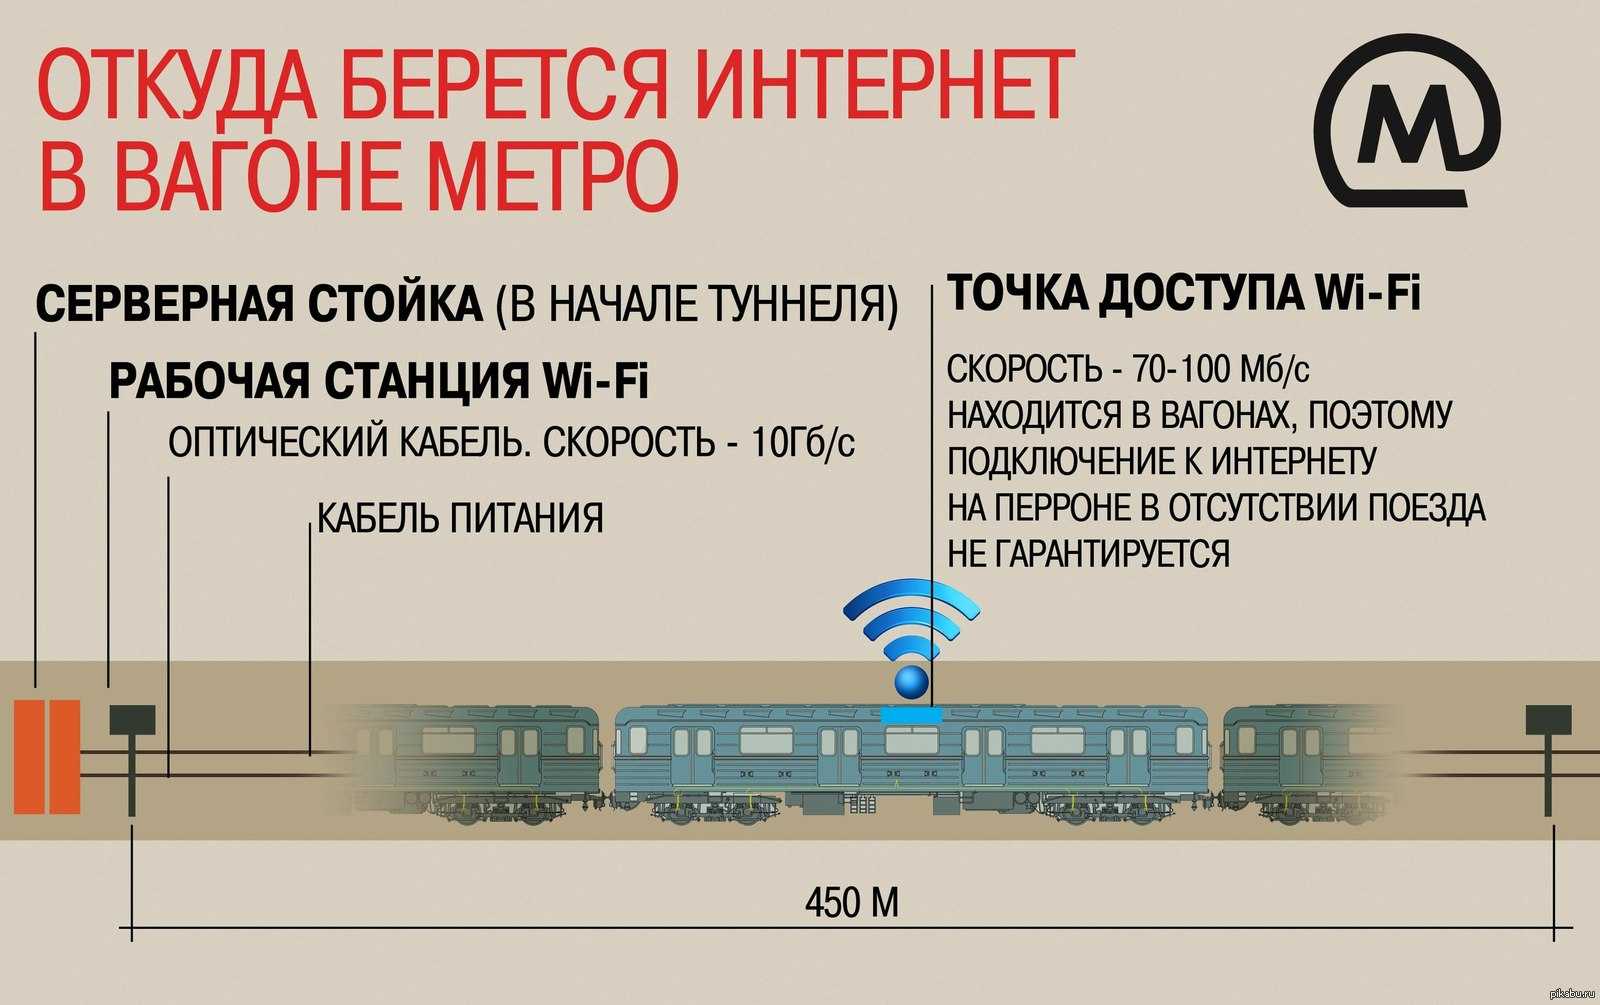 Wifi в метро без рекламы — как отключить рекламу в mt free не только абонентам теле2?